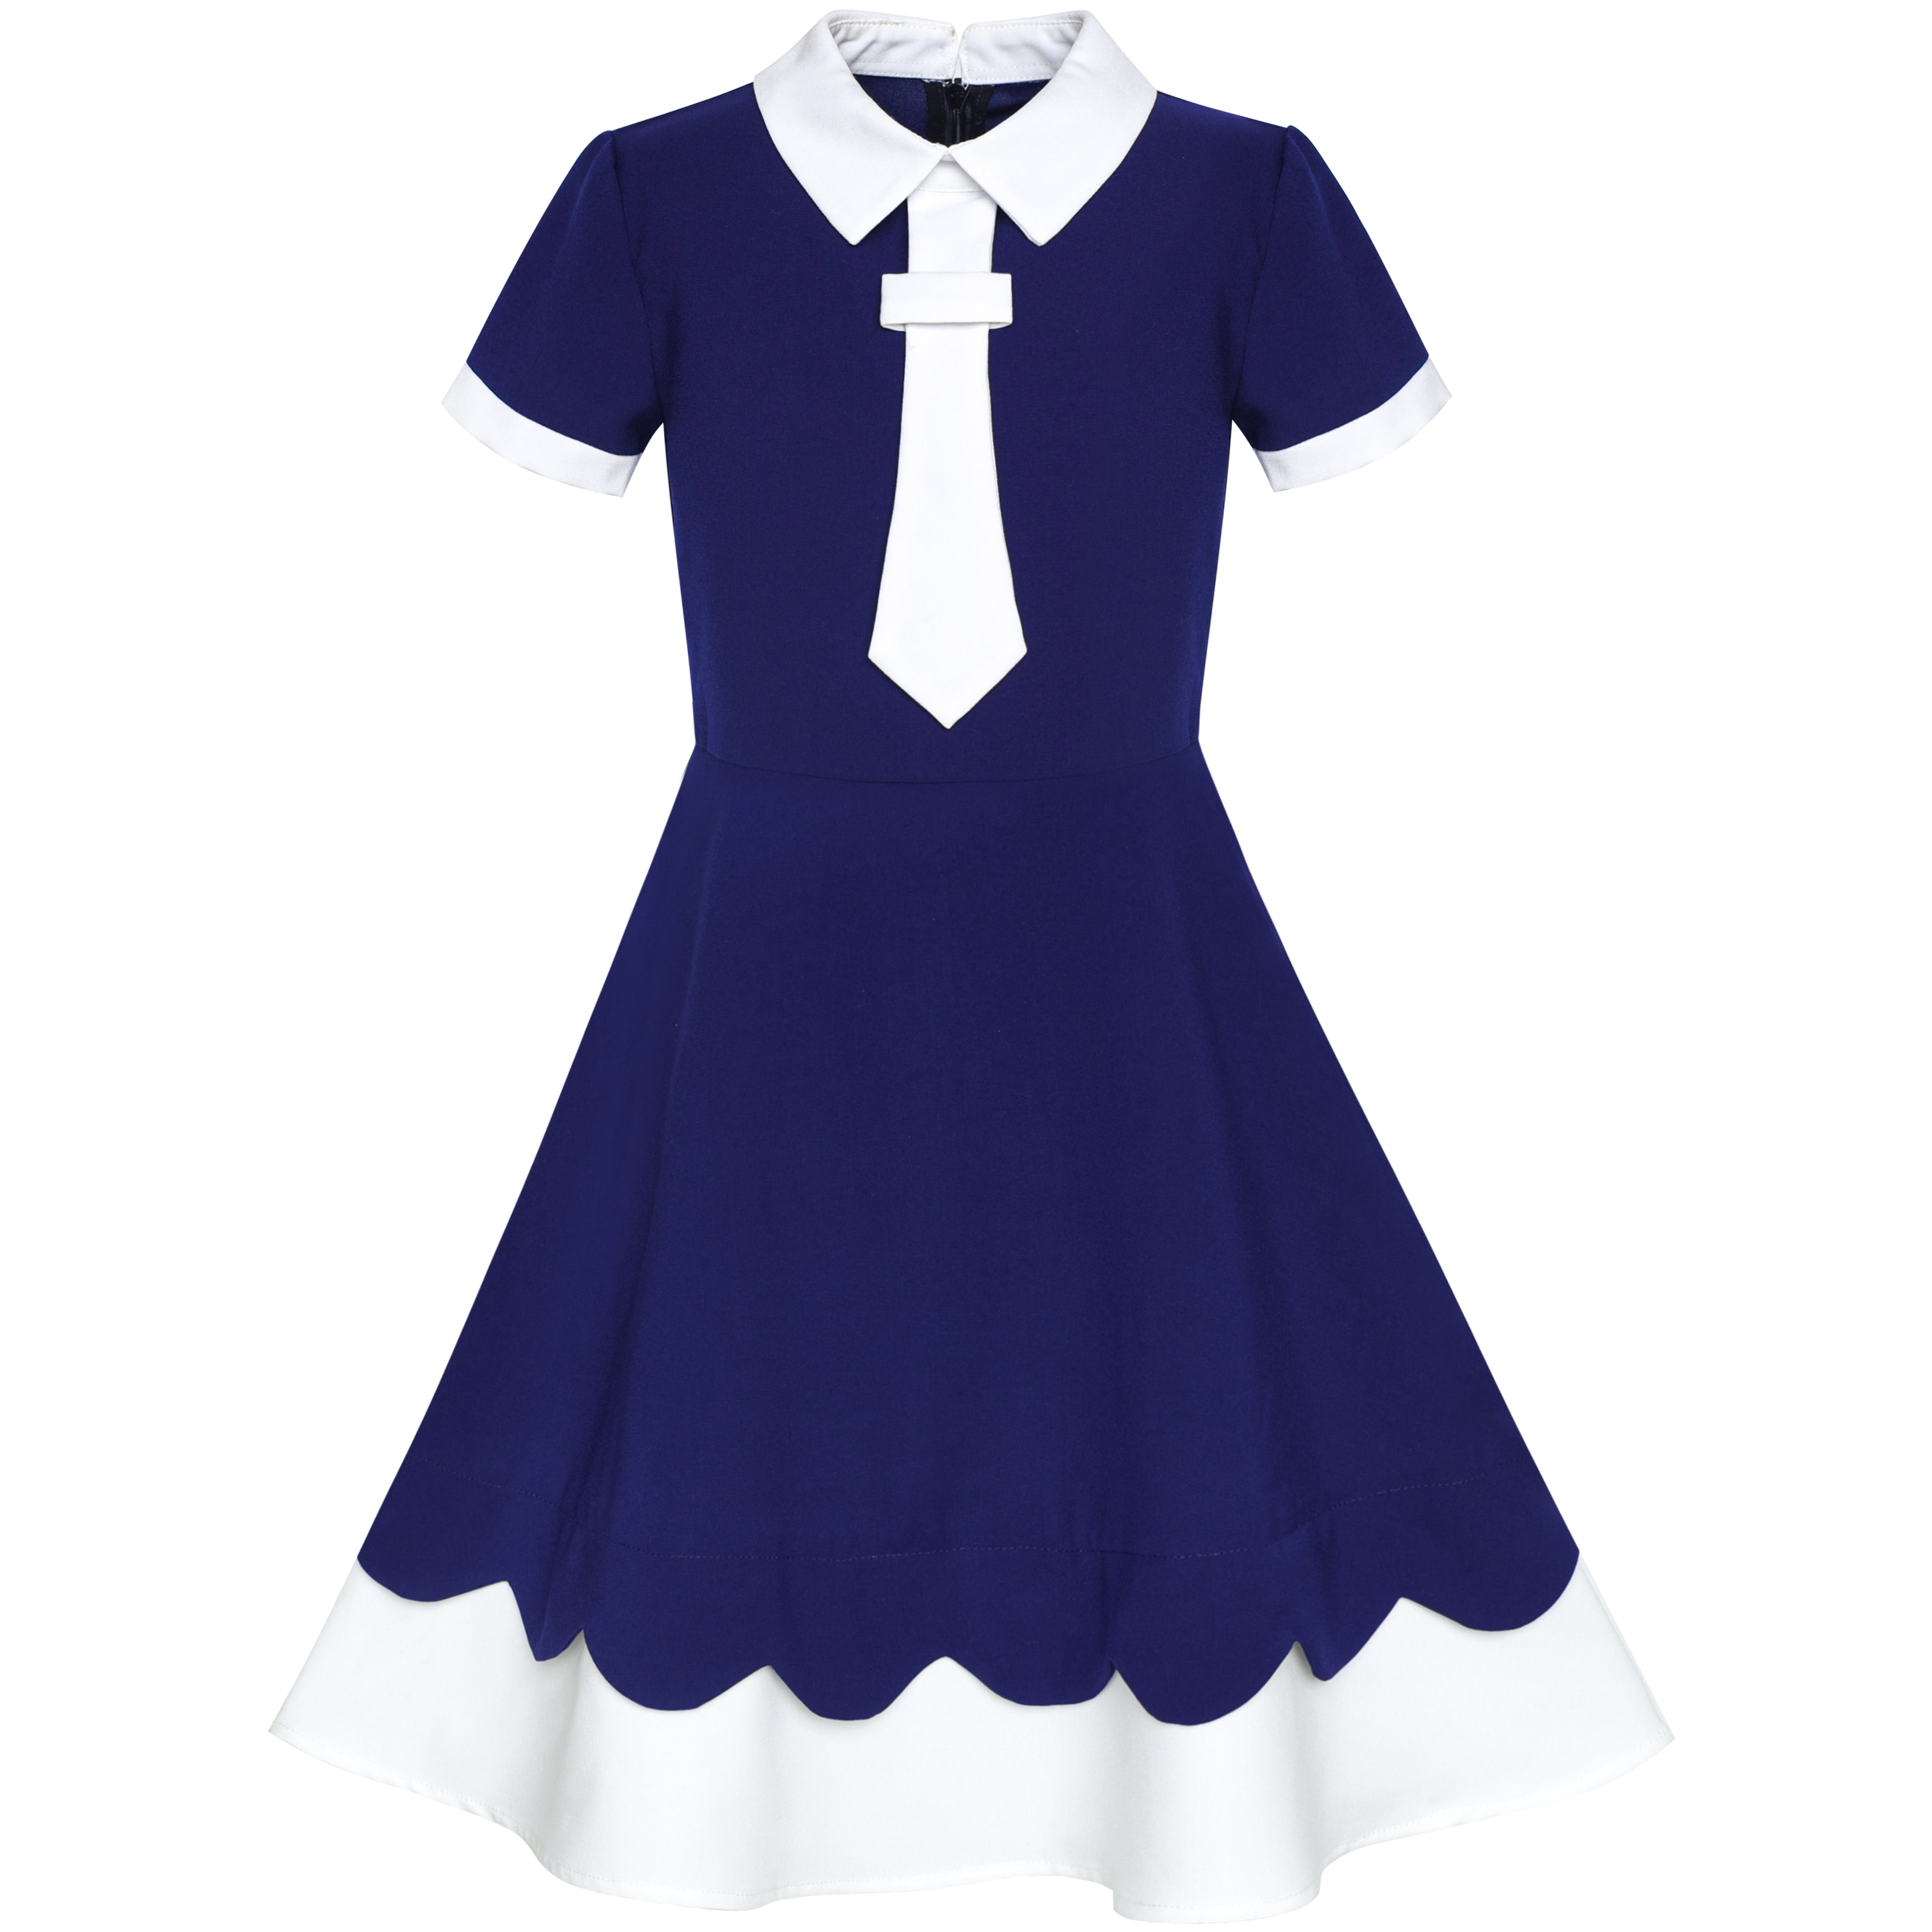 Sunny Fashion Girls Dress Back School Uniform Navy Blue White Collar Tie Short Sleeve 7 Years Walmart Com Walmart Com,Modern Dressing Table Designs For Bedroom Images